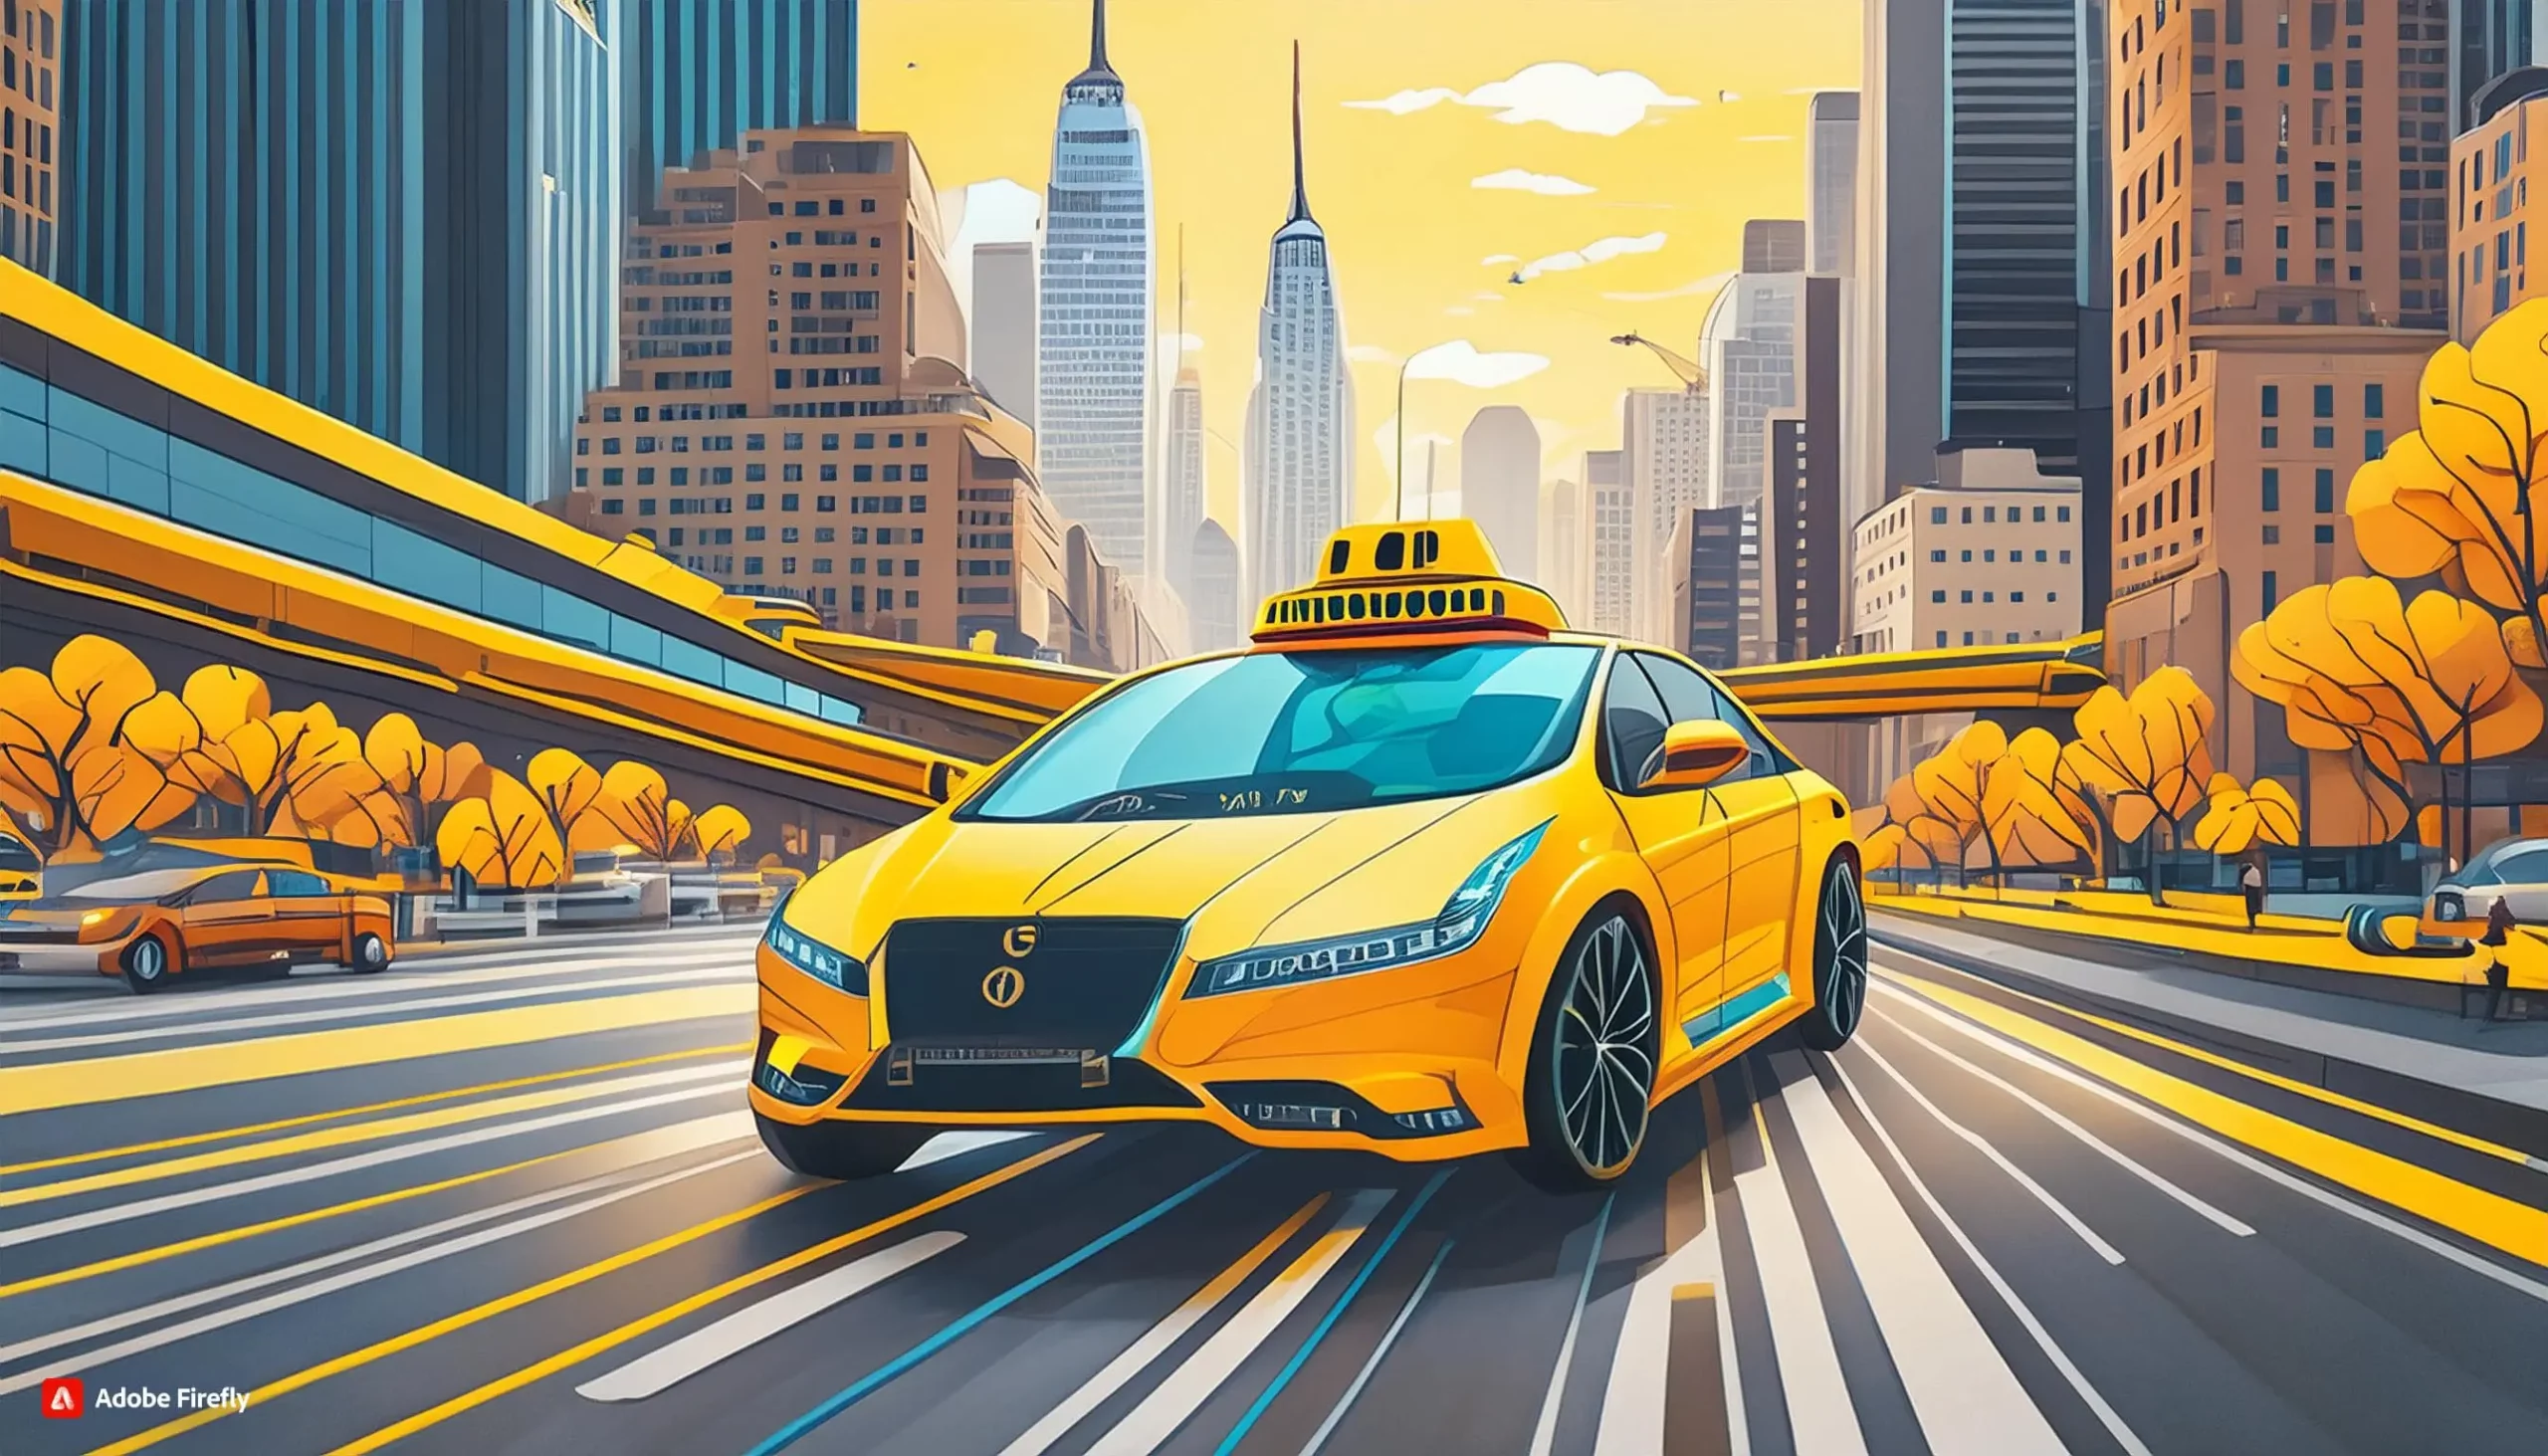 Robotaxi Tesla: il taxi a guida autonoma di Elon Musk